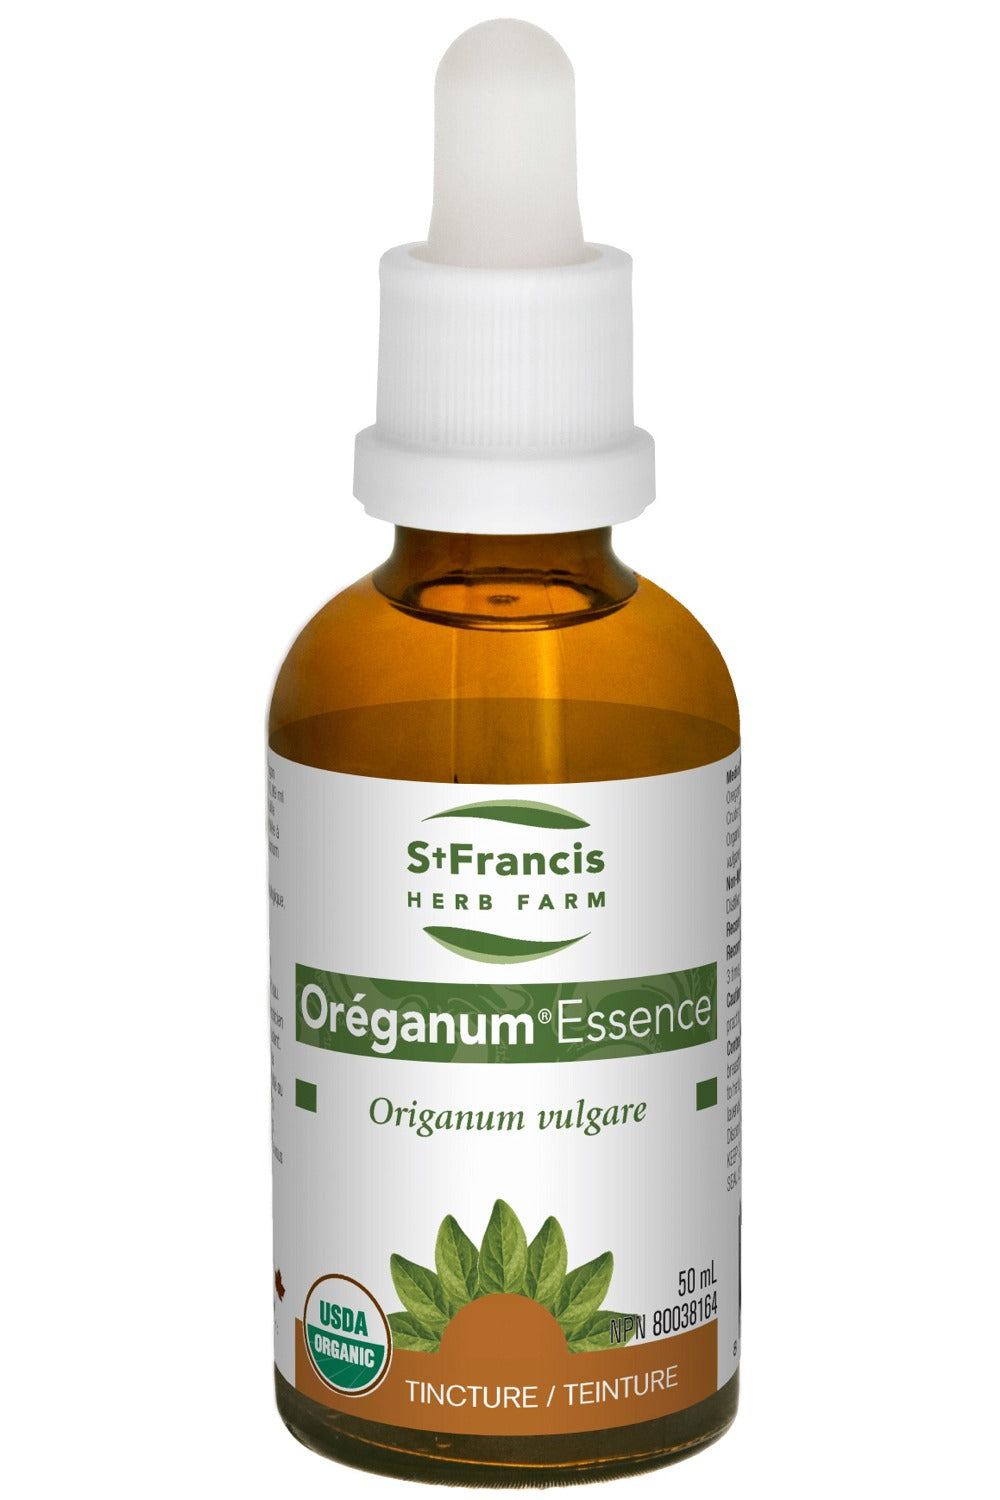 ST FRANCIS HERB FARM Oréganum Essence (50 ml)